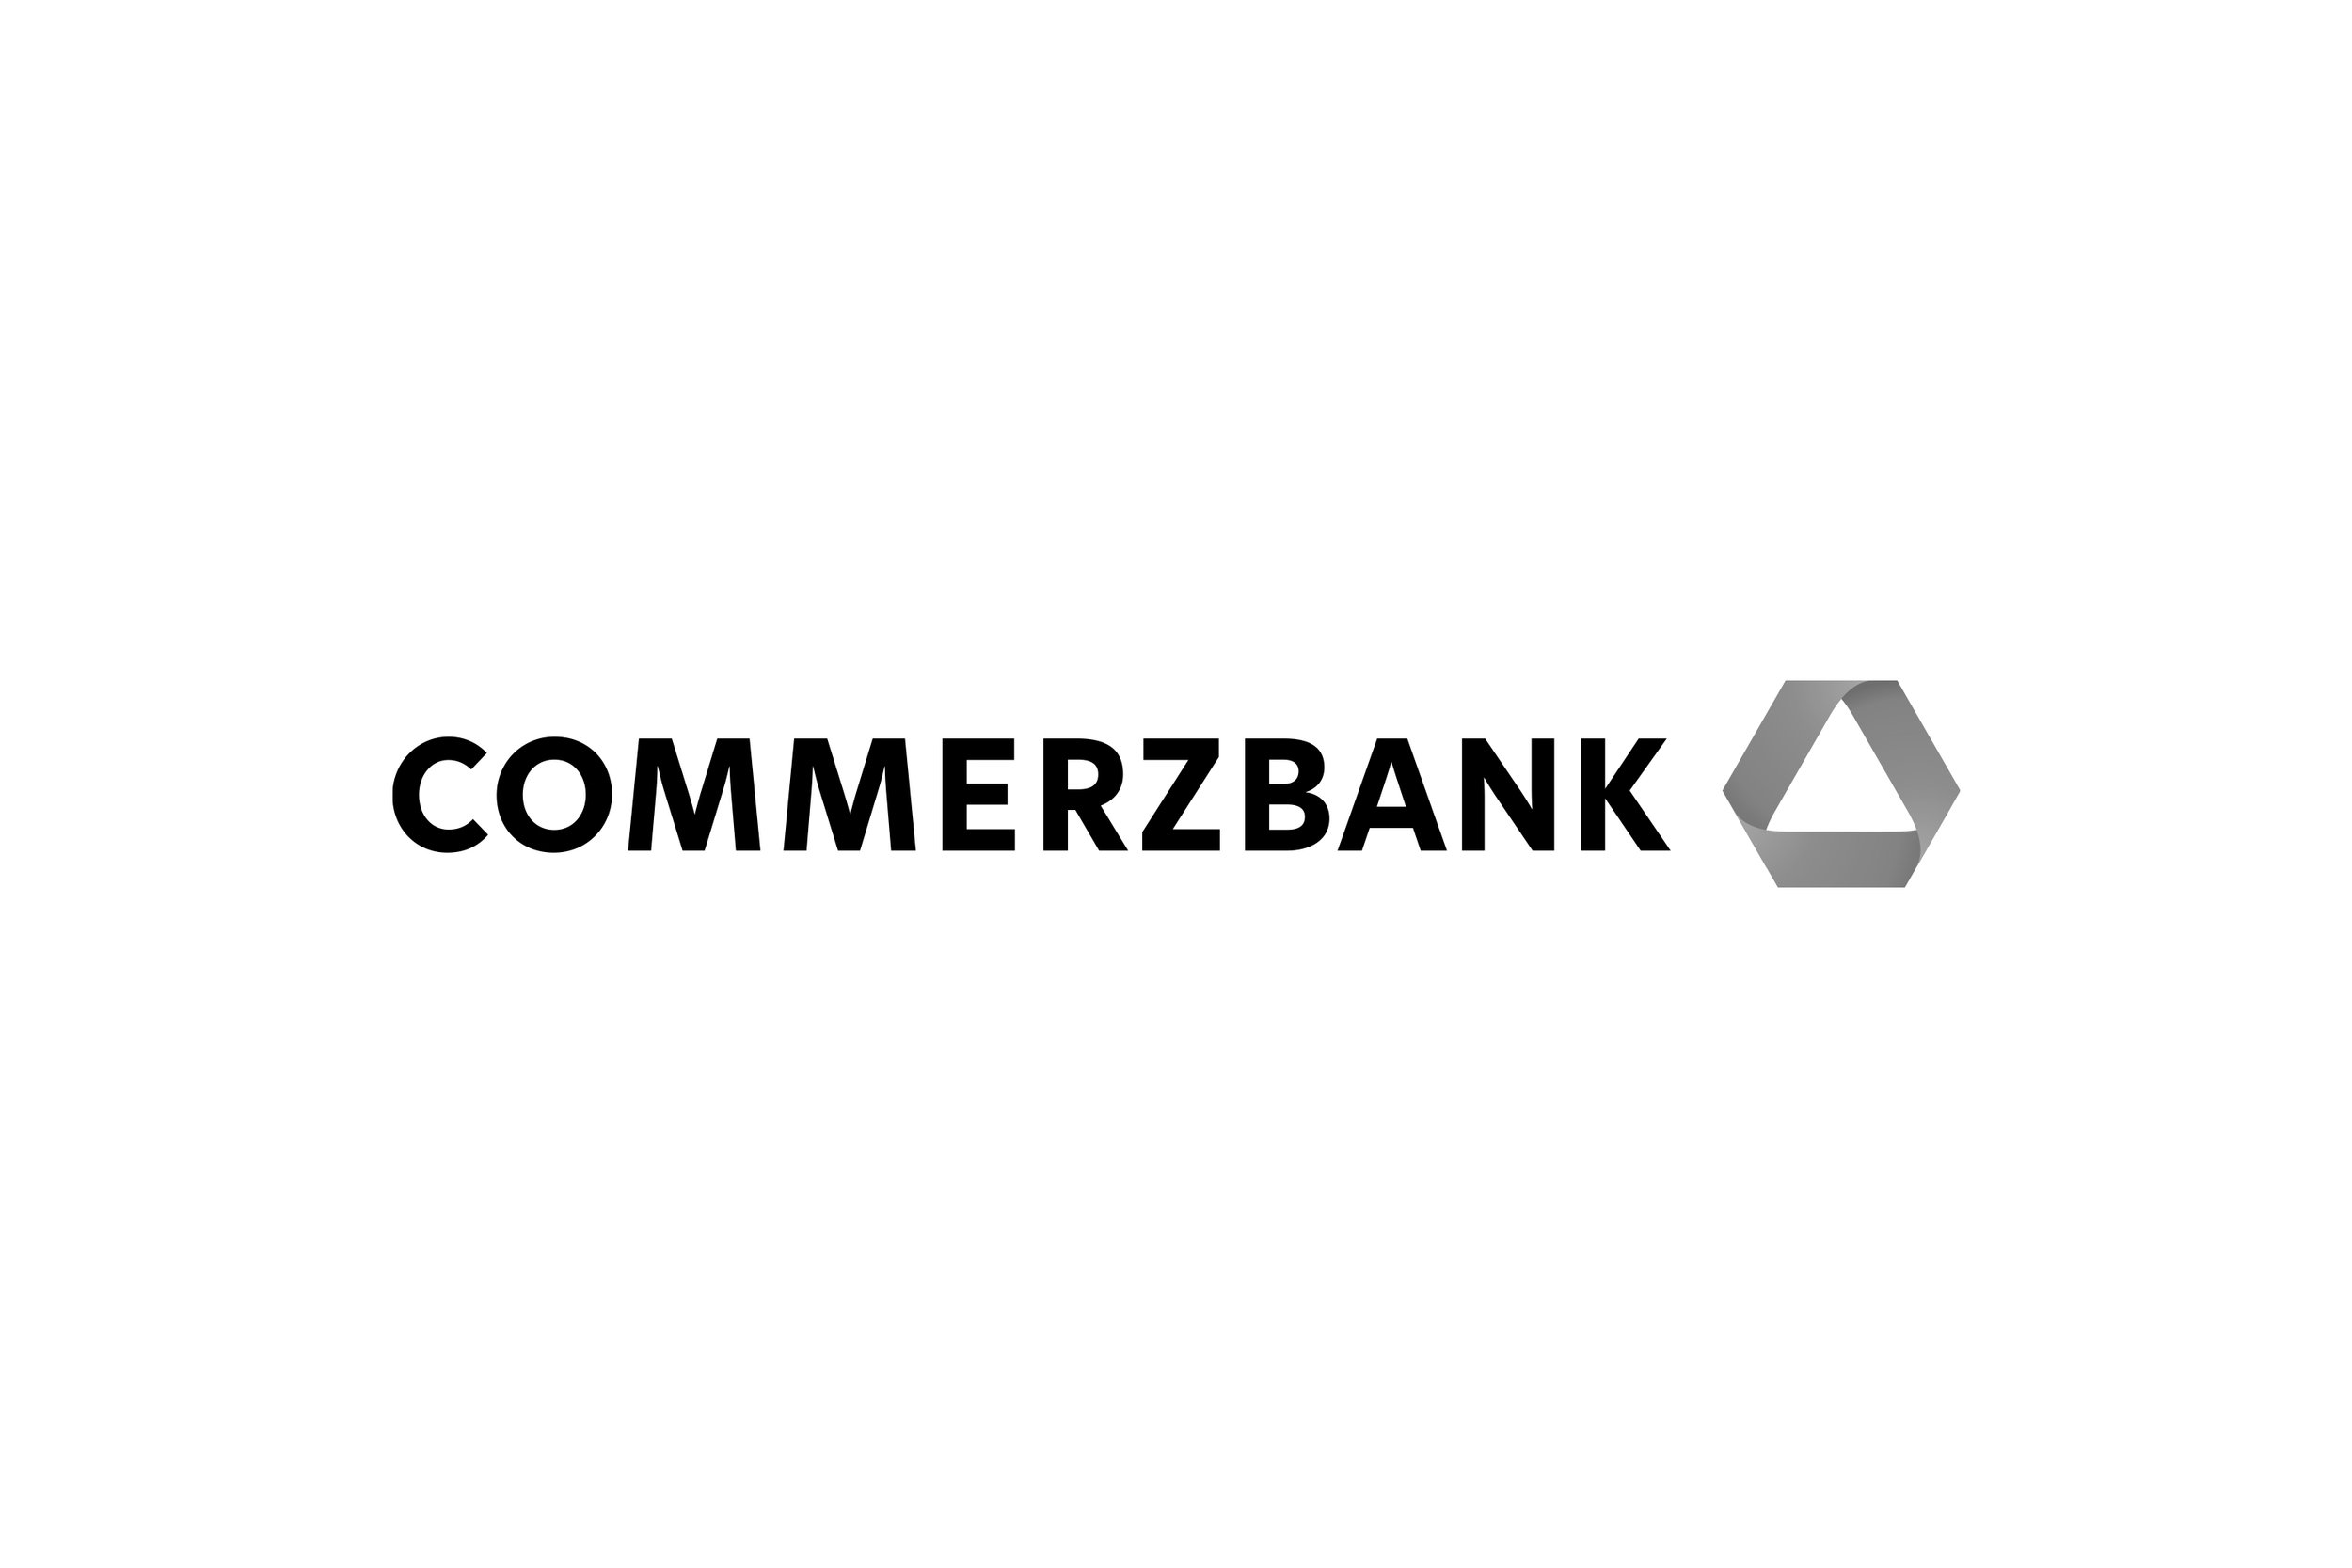 blank-commerzbank-logo.jpg